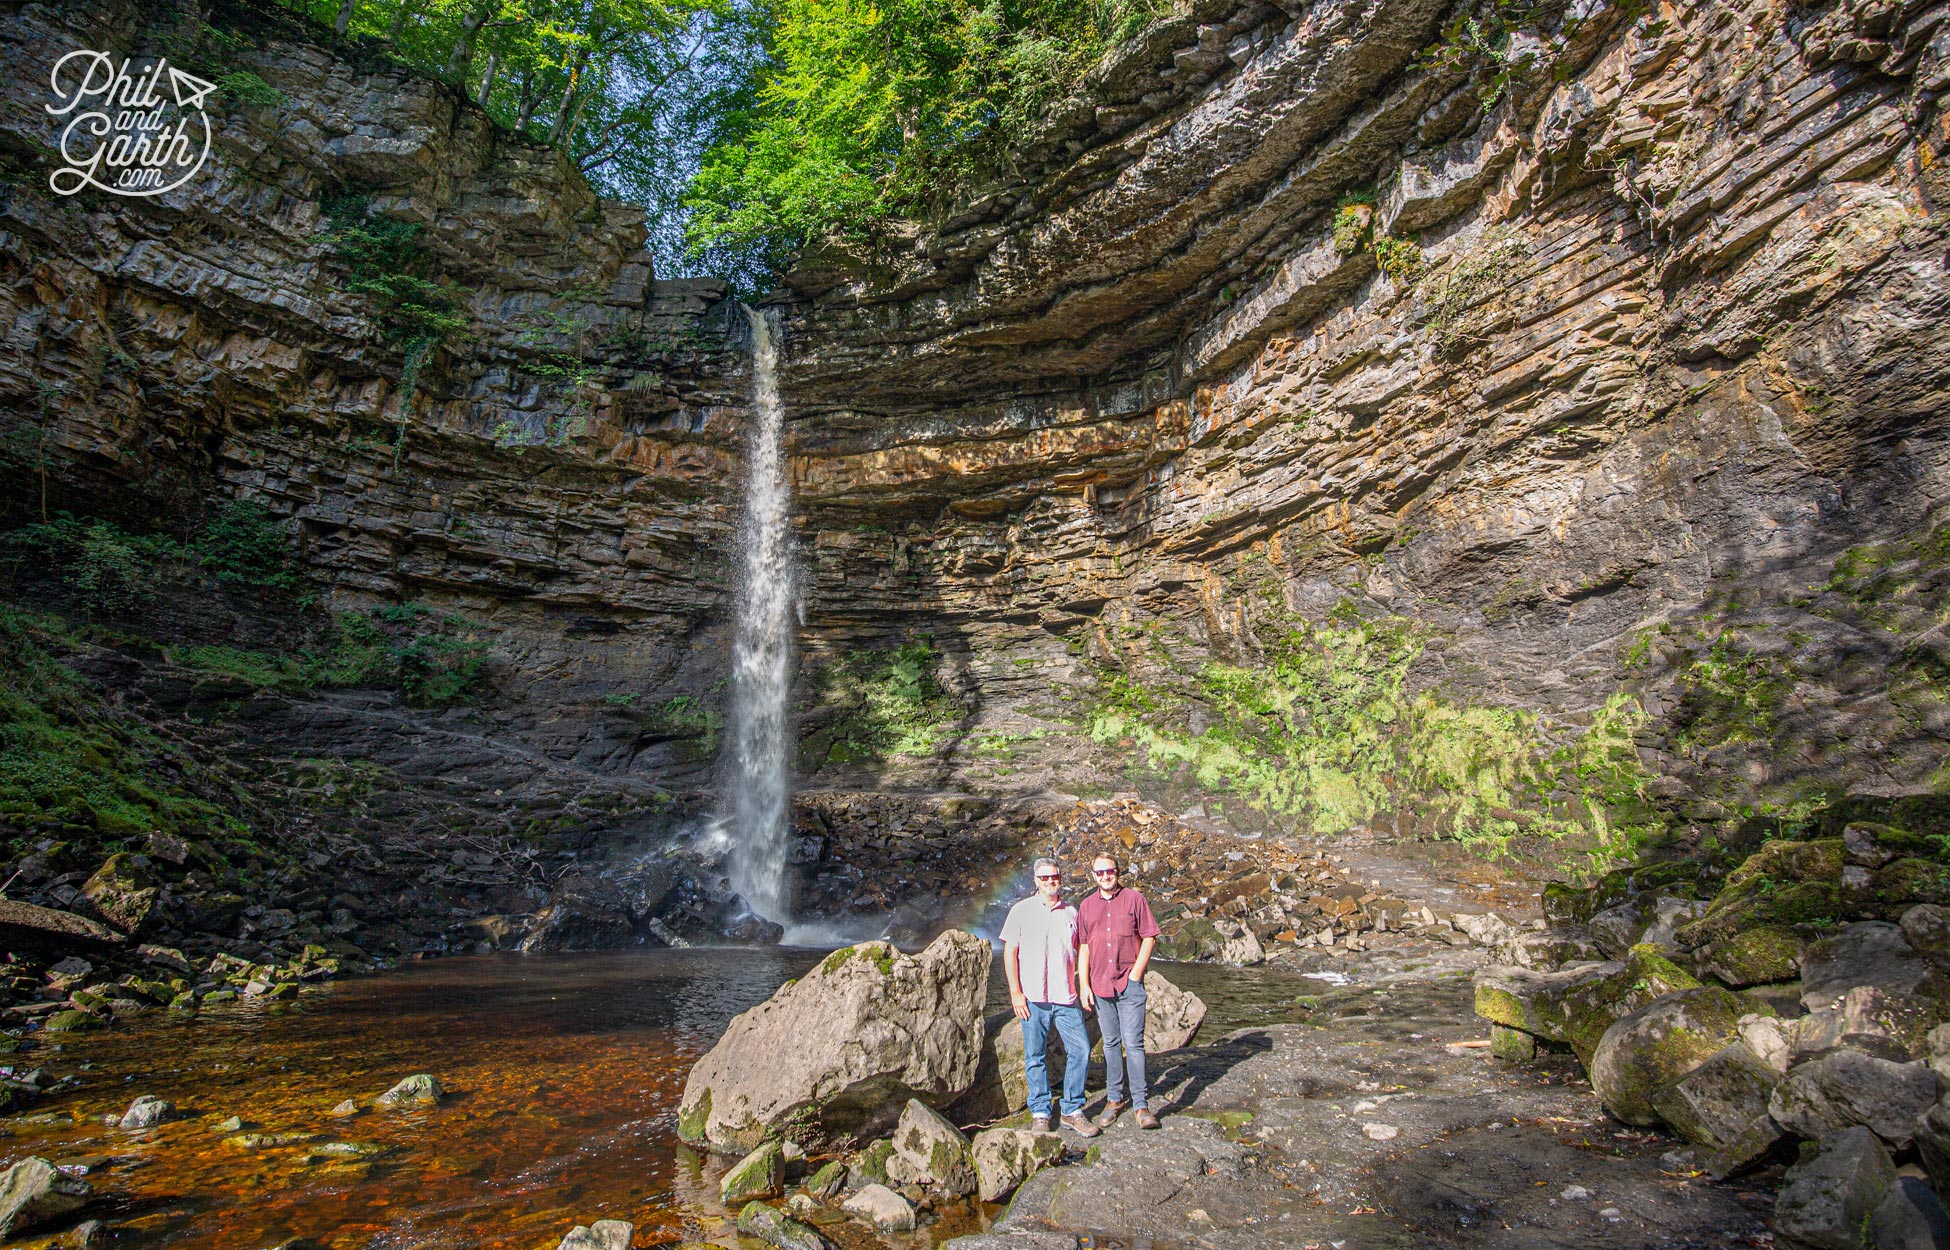 Hardraw Force - England's largest single drop waterfall